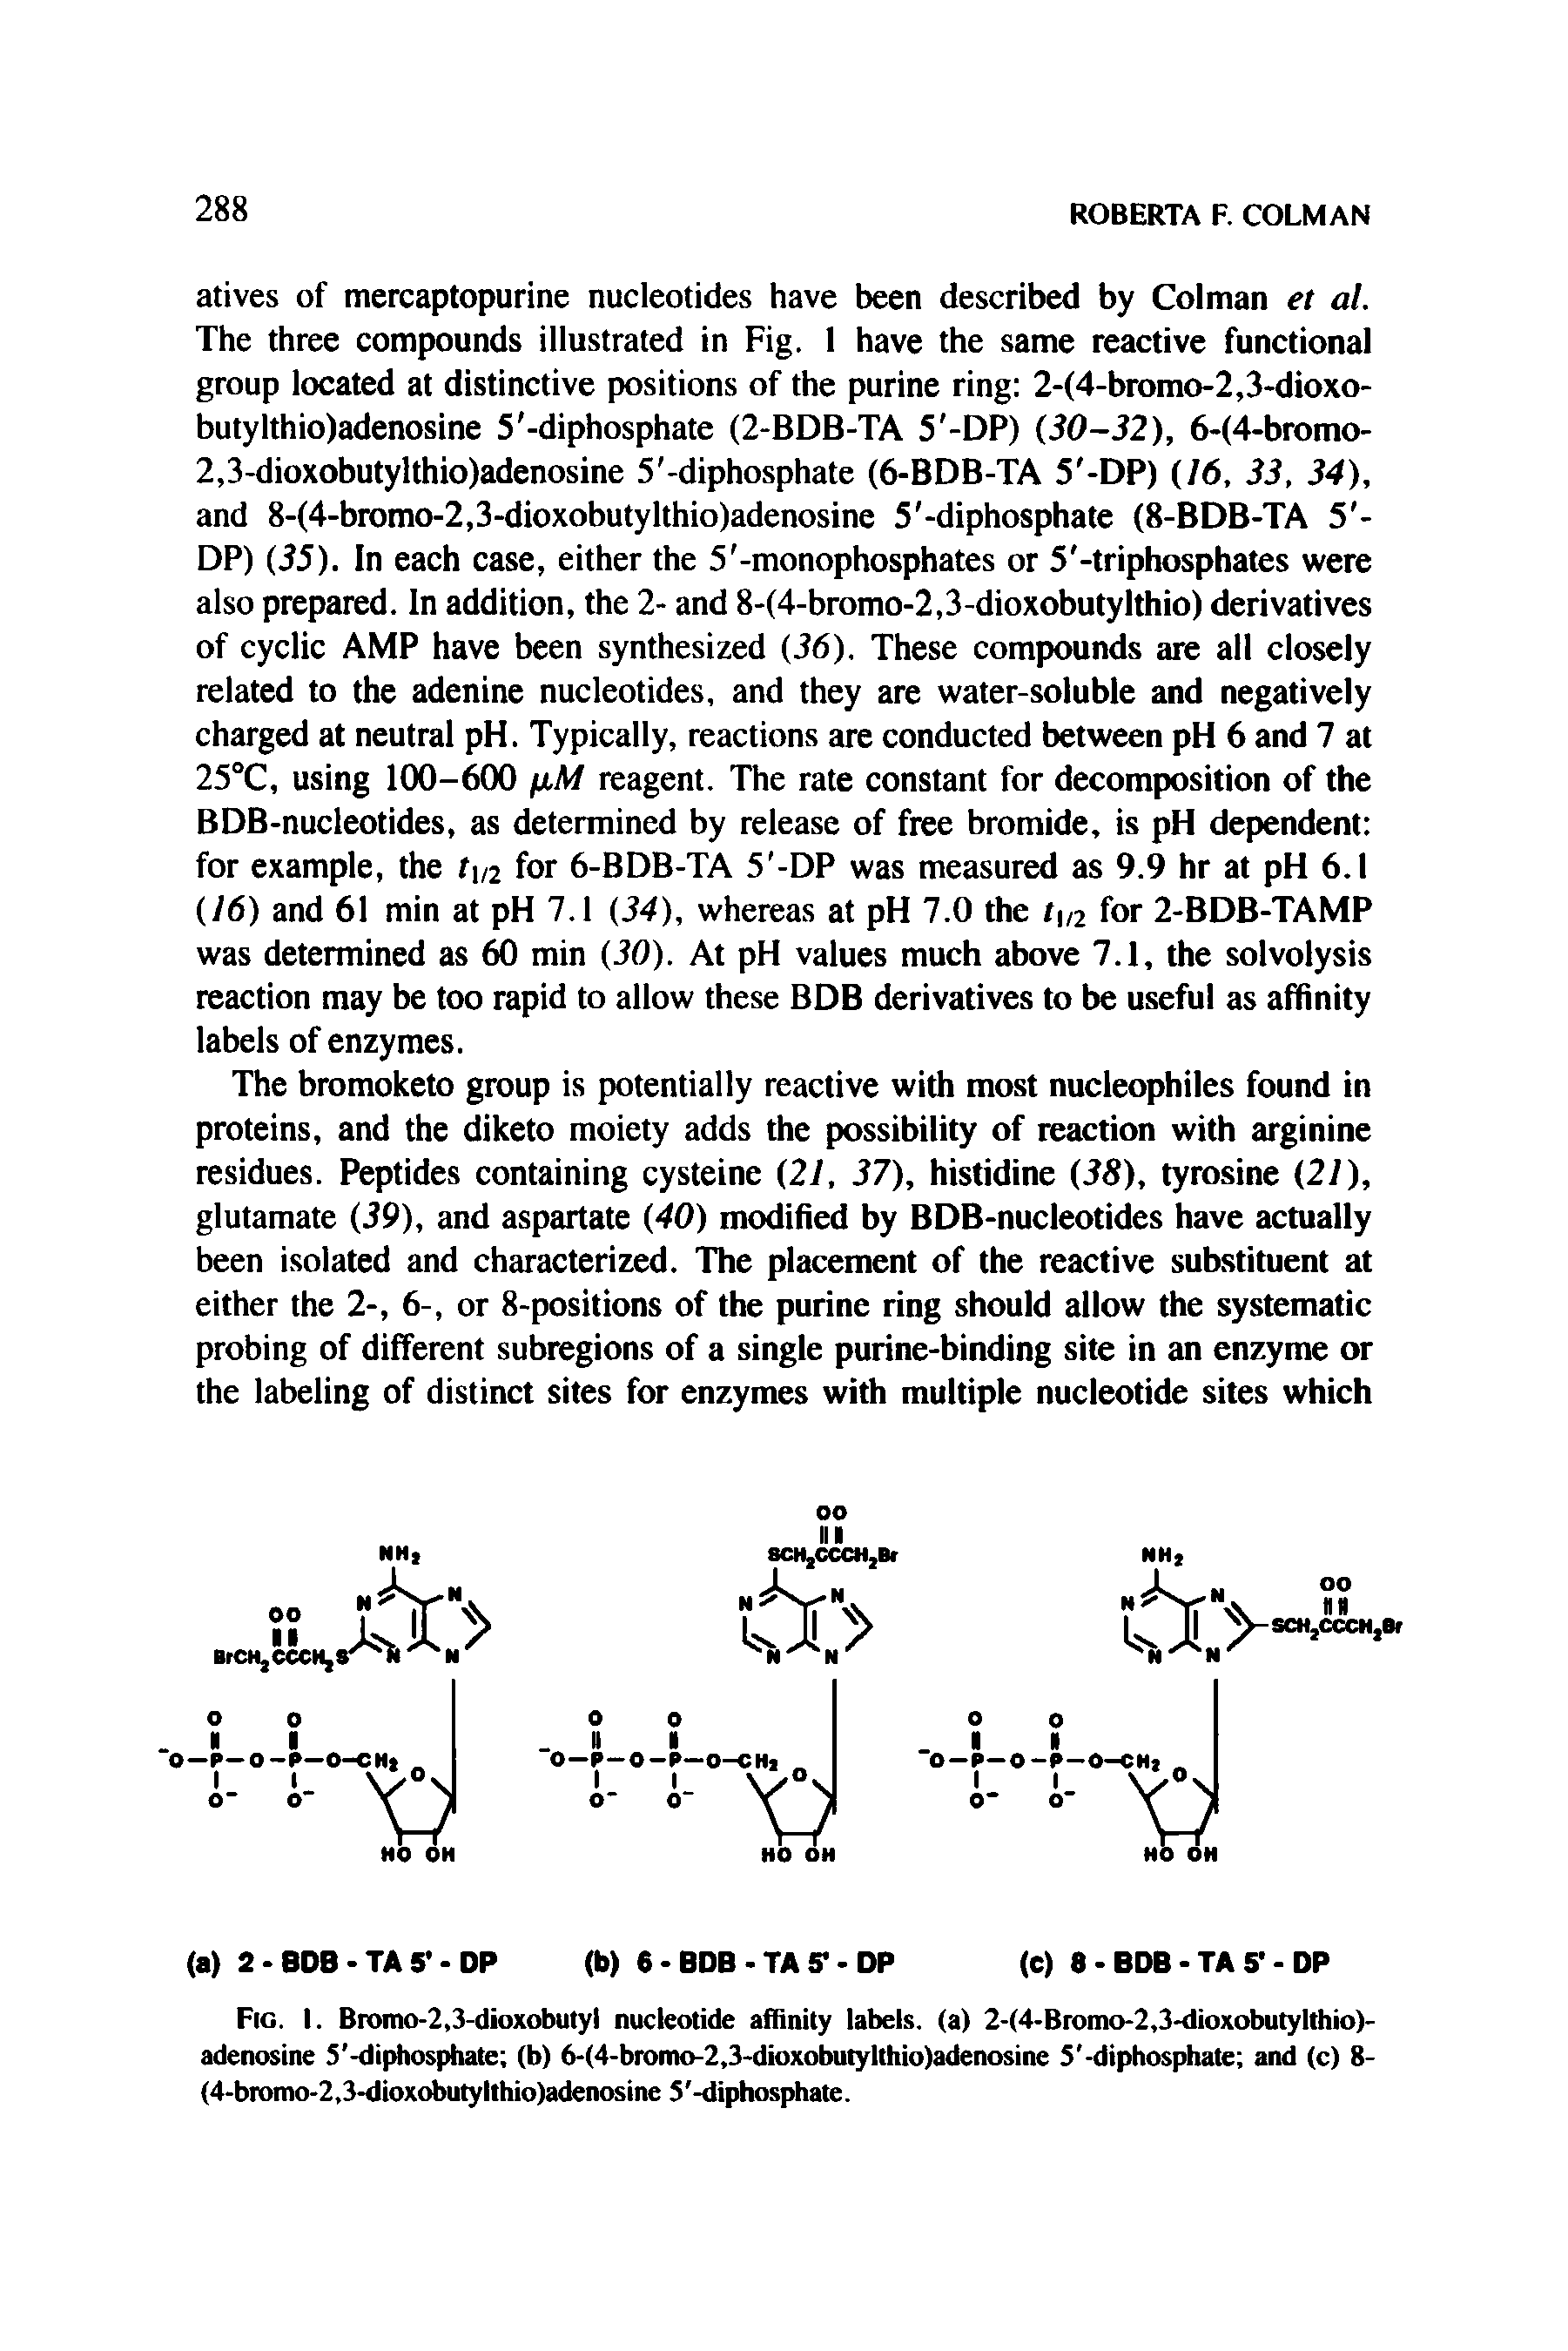 Fig. I. Bromo-2,3-dioxobutyl nucleotide affinity labels, (a) 2-(4-Bromo-2,3-dioxobutylthio)-adenosine S -diphosphate (b) 6-(4-bromo-2,3-dioxobutylthio)adenosine S -dipho phate and (c) 8-(4-bromo-2,3-dioxobutylthio)adenosine S -diphosphate.